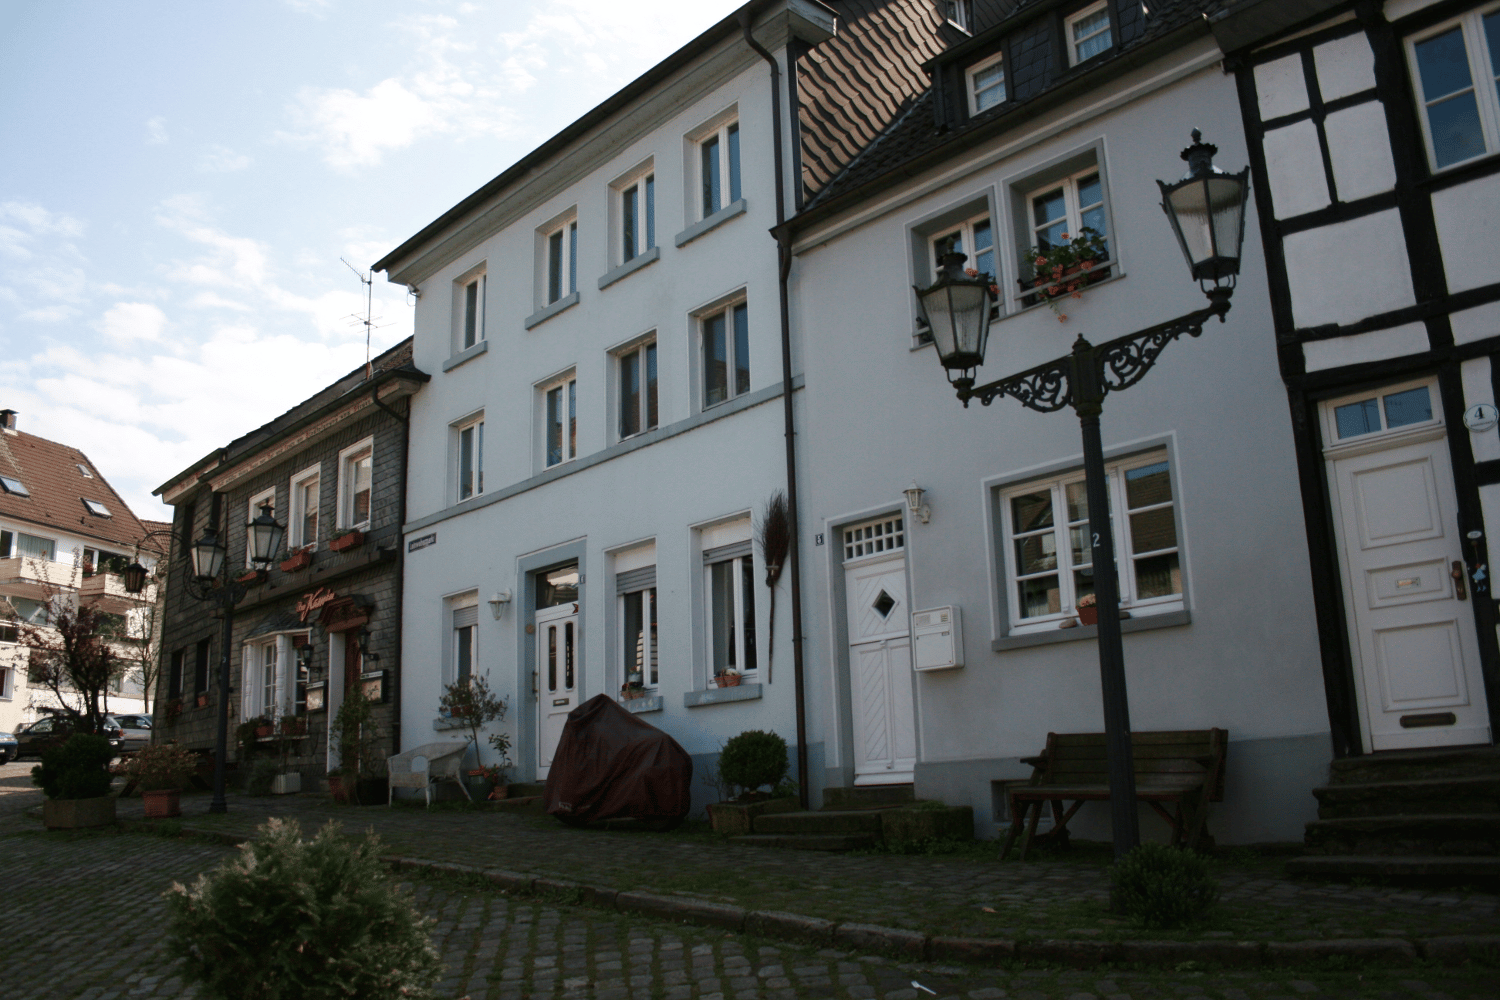 Linnenweverij in Essen, Noordrijn-Westfalen. Afbeelding via wikimedia (GFDL)